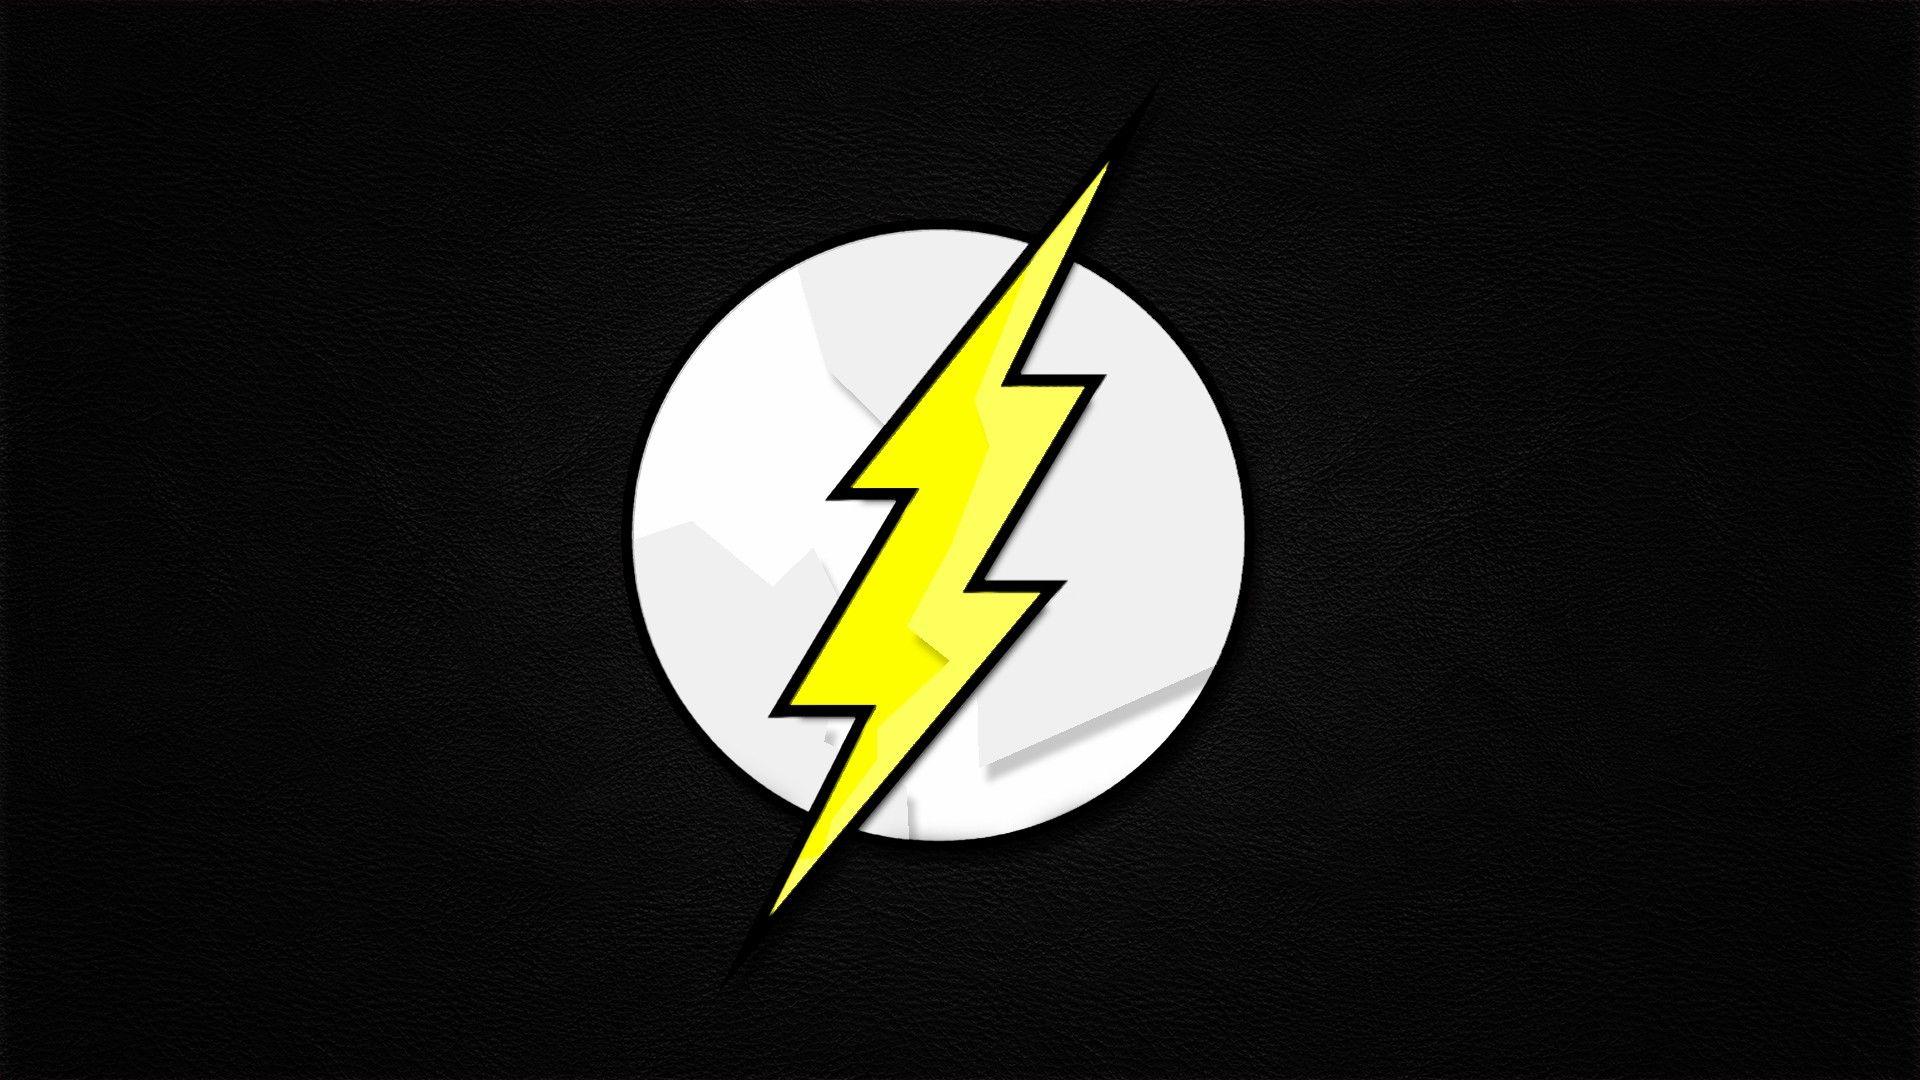 Minimalistic Comics The Flash Logos Flash Superhero Background